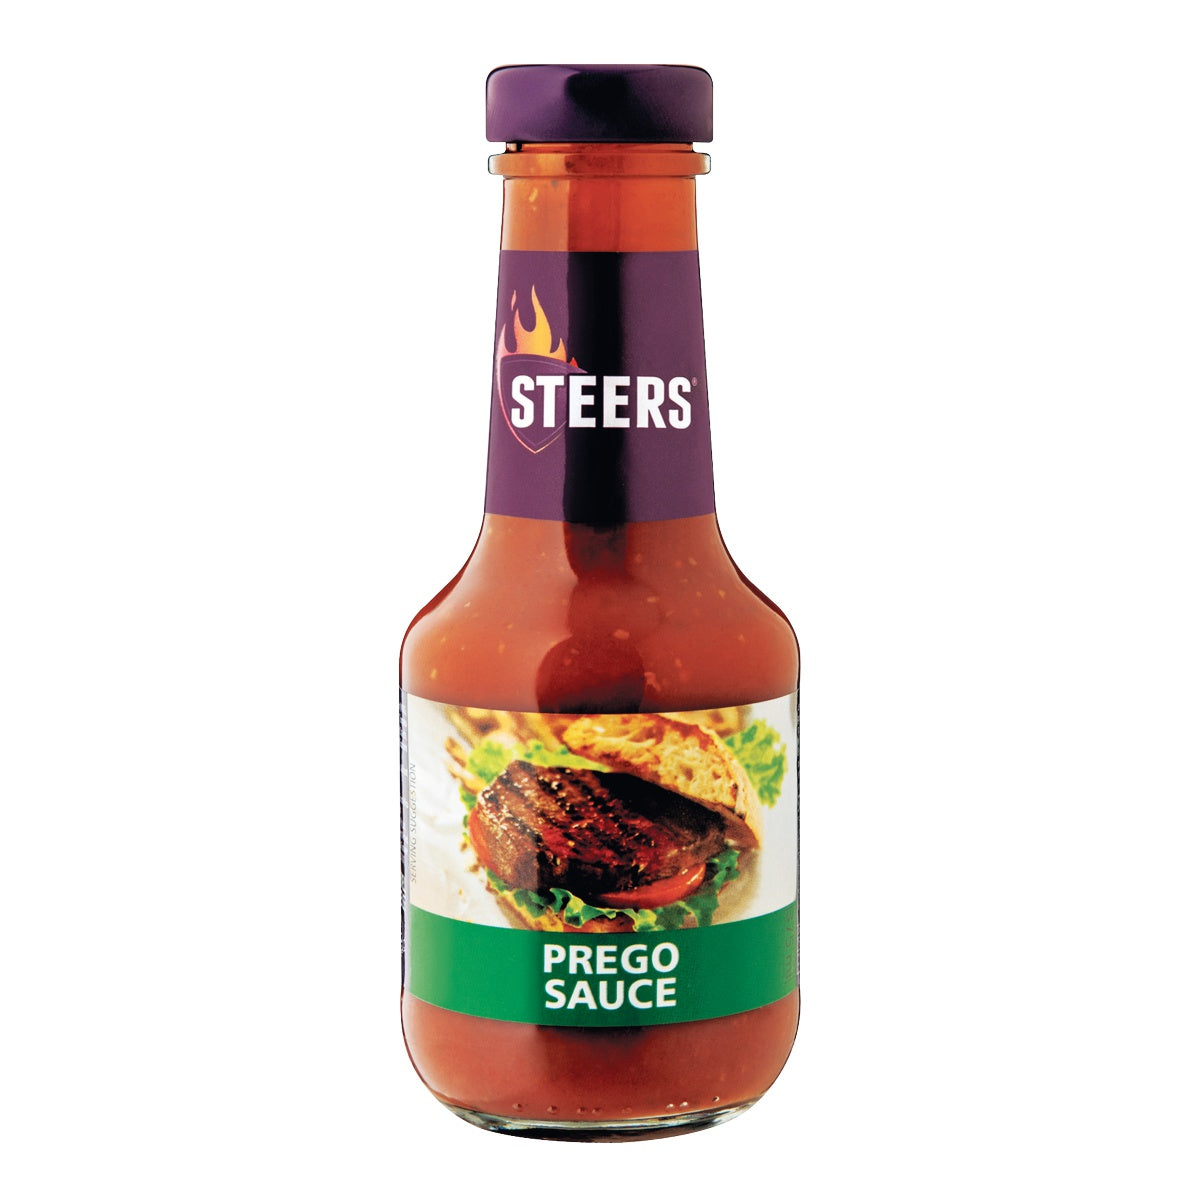 Prego Sauce Steers 375ml